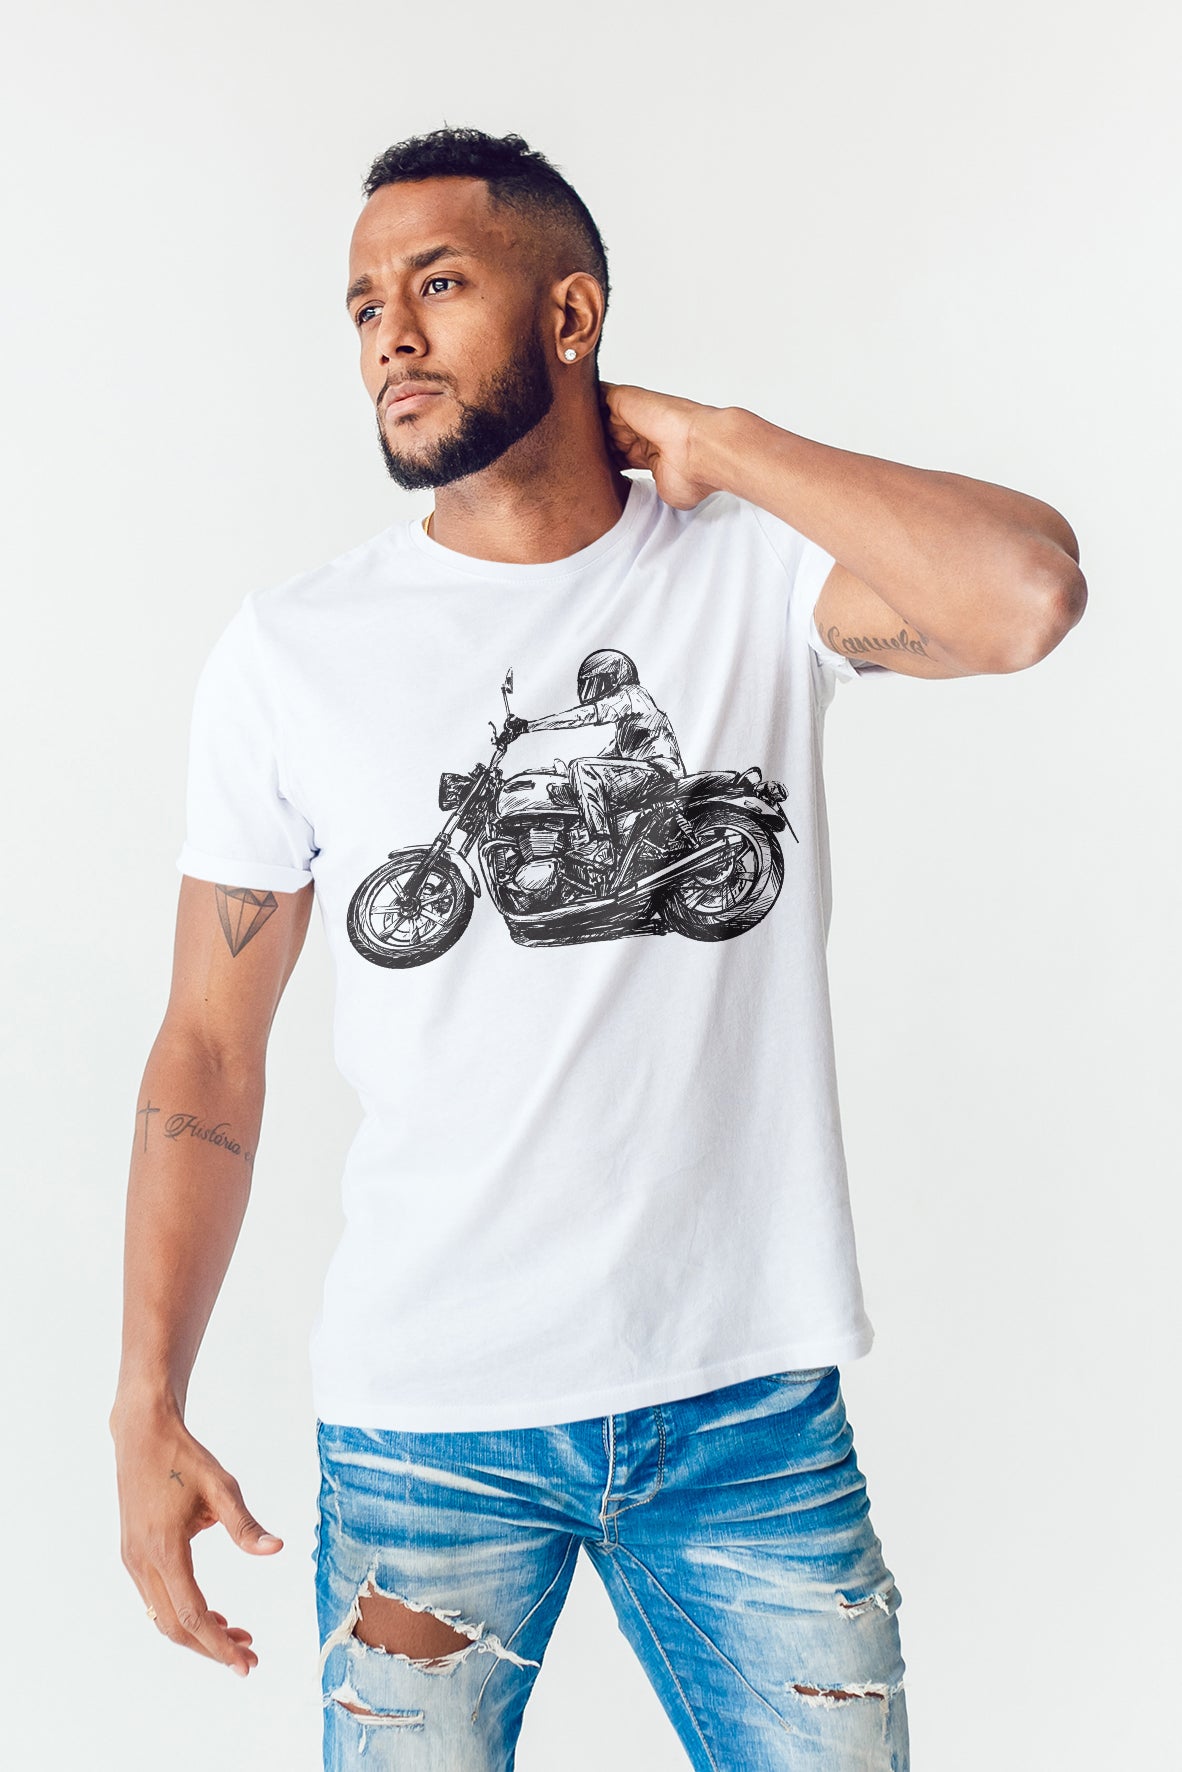 "STYLIZED SIDE MOTORCYCLE" T-shirt